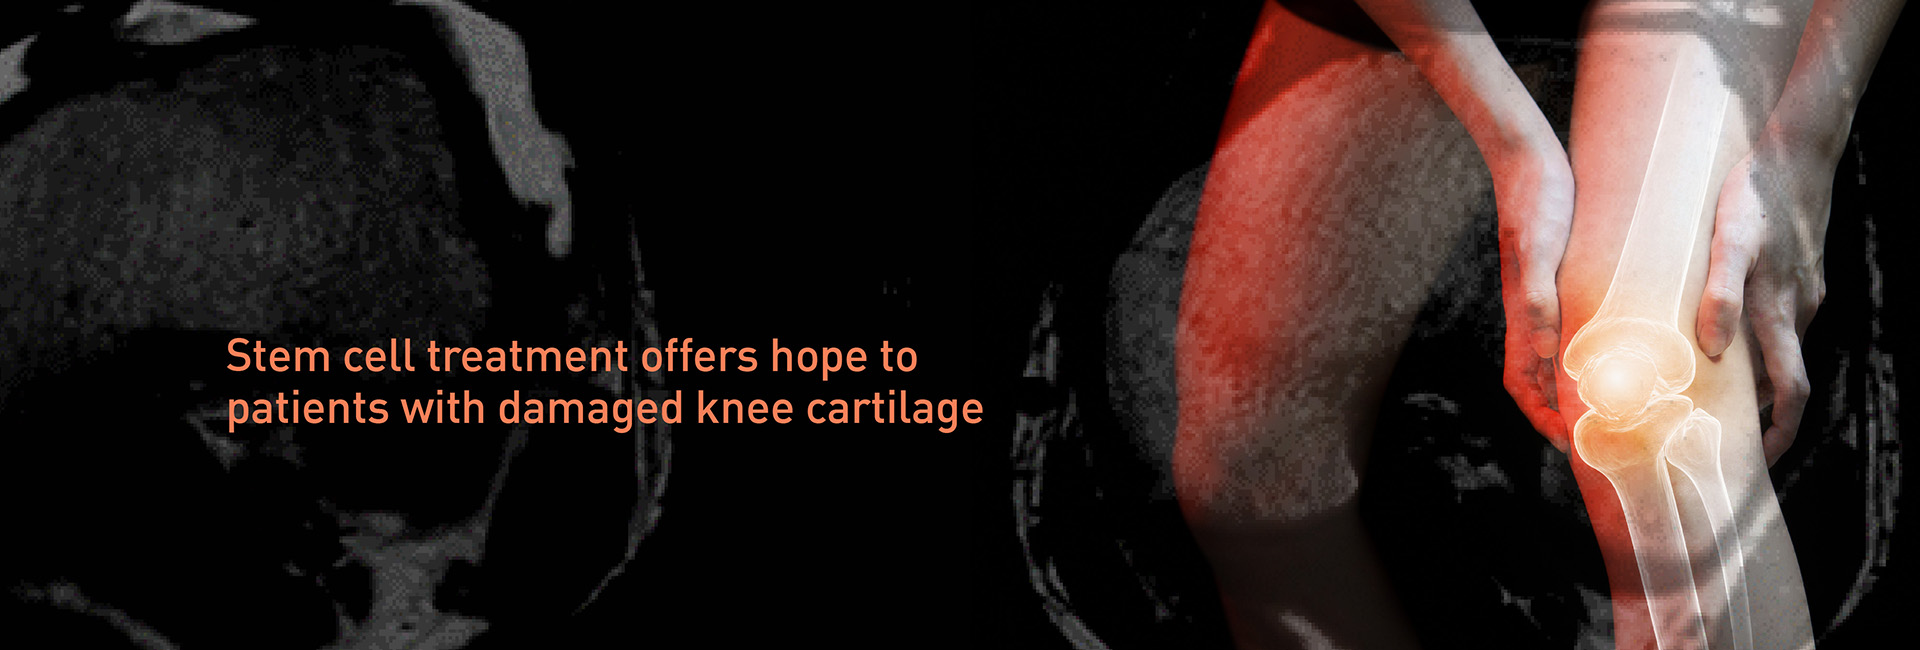 Stem cell treatment for damaged knee cartilage